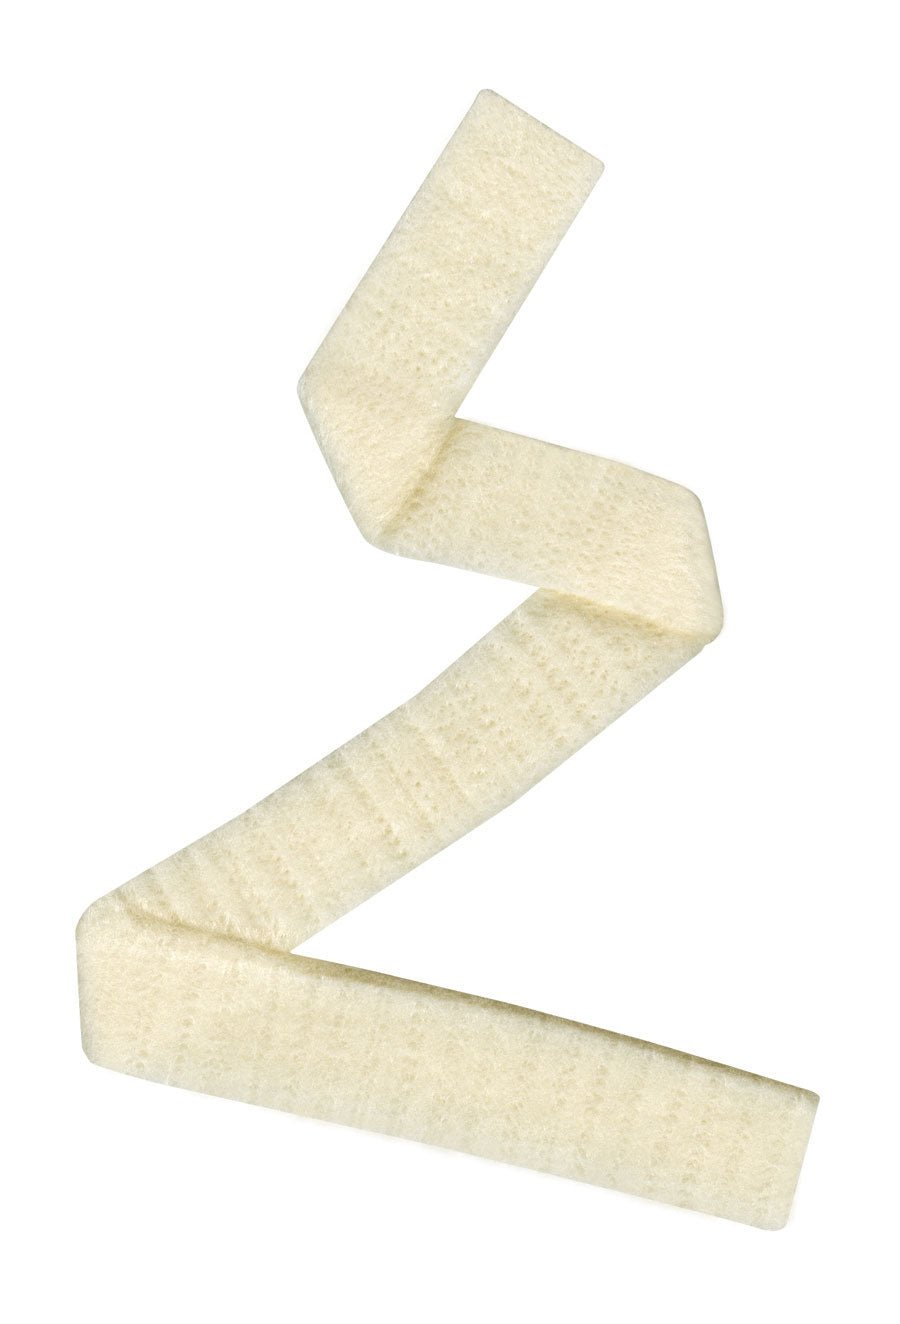 BX/10 - Derma Sciences Algicell&reg; Calcium Alginate Dressing, 3/4" x 12" Rope - Best Buy Medical Supplies